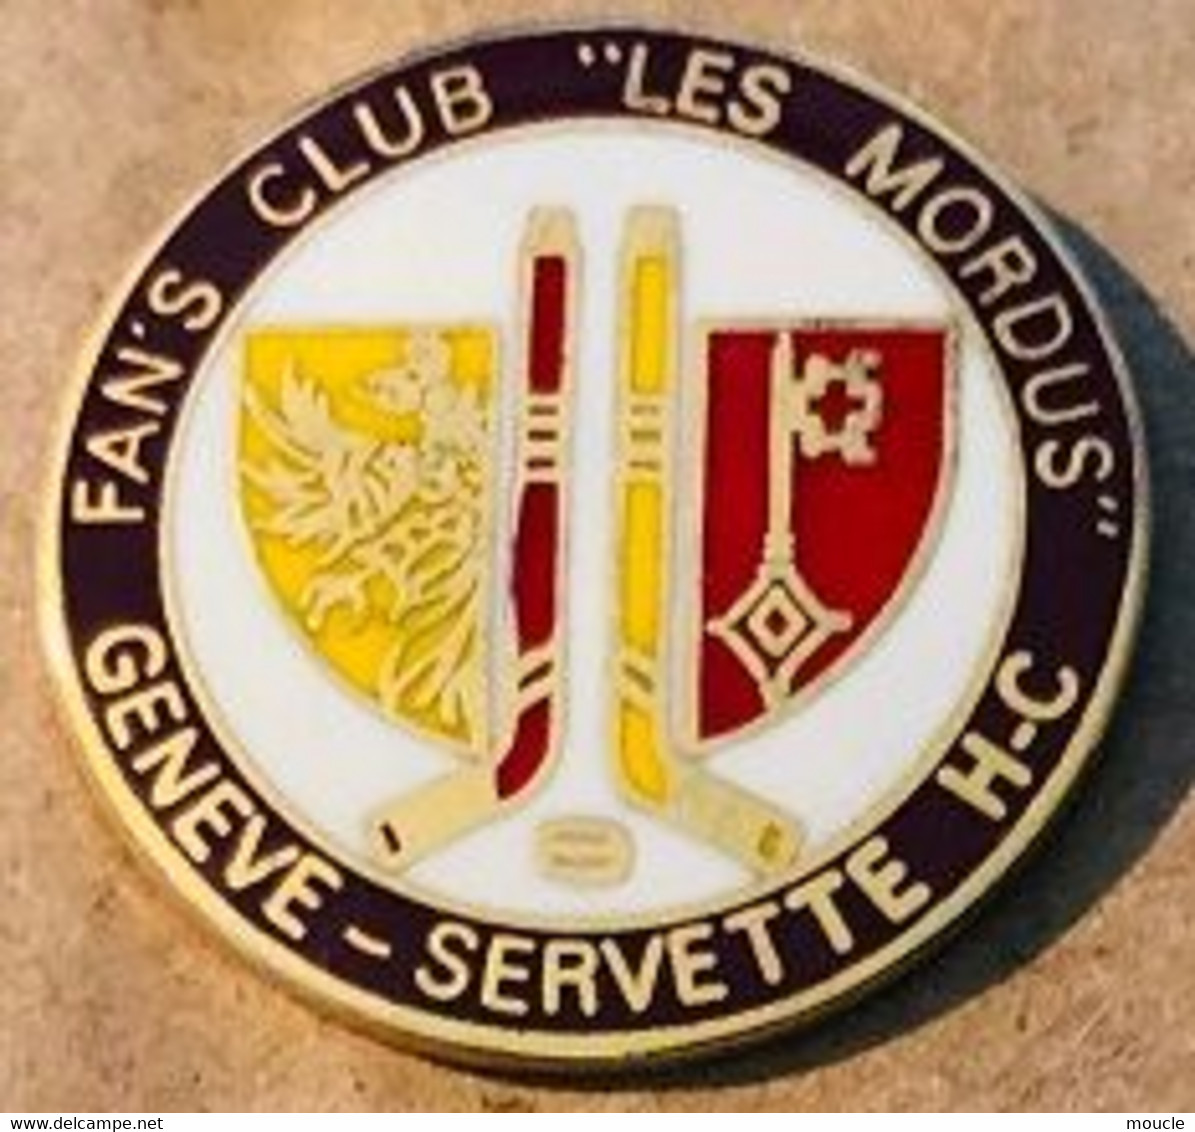 GENEVE SERVETTE HOCKEY CLUB - FAN'S CLUB "LES MORDUS"- ICE - AIGLE - GENEVA - SUISSE - SCHWEIZ - SWITZERLAND -     (28) - Winter Sports